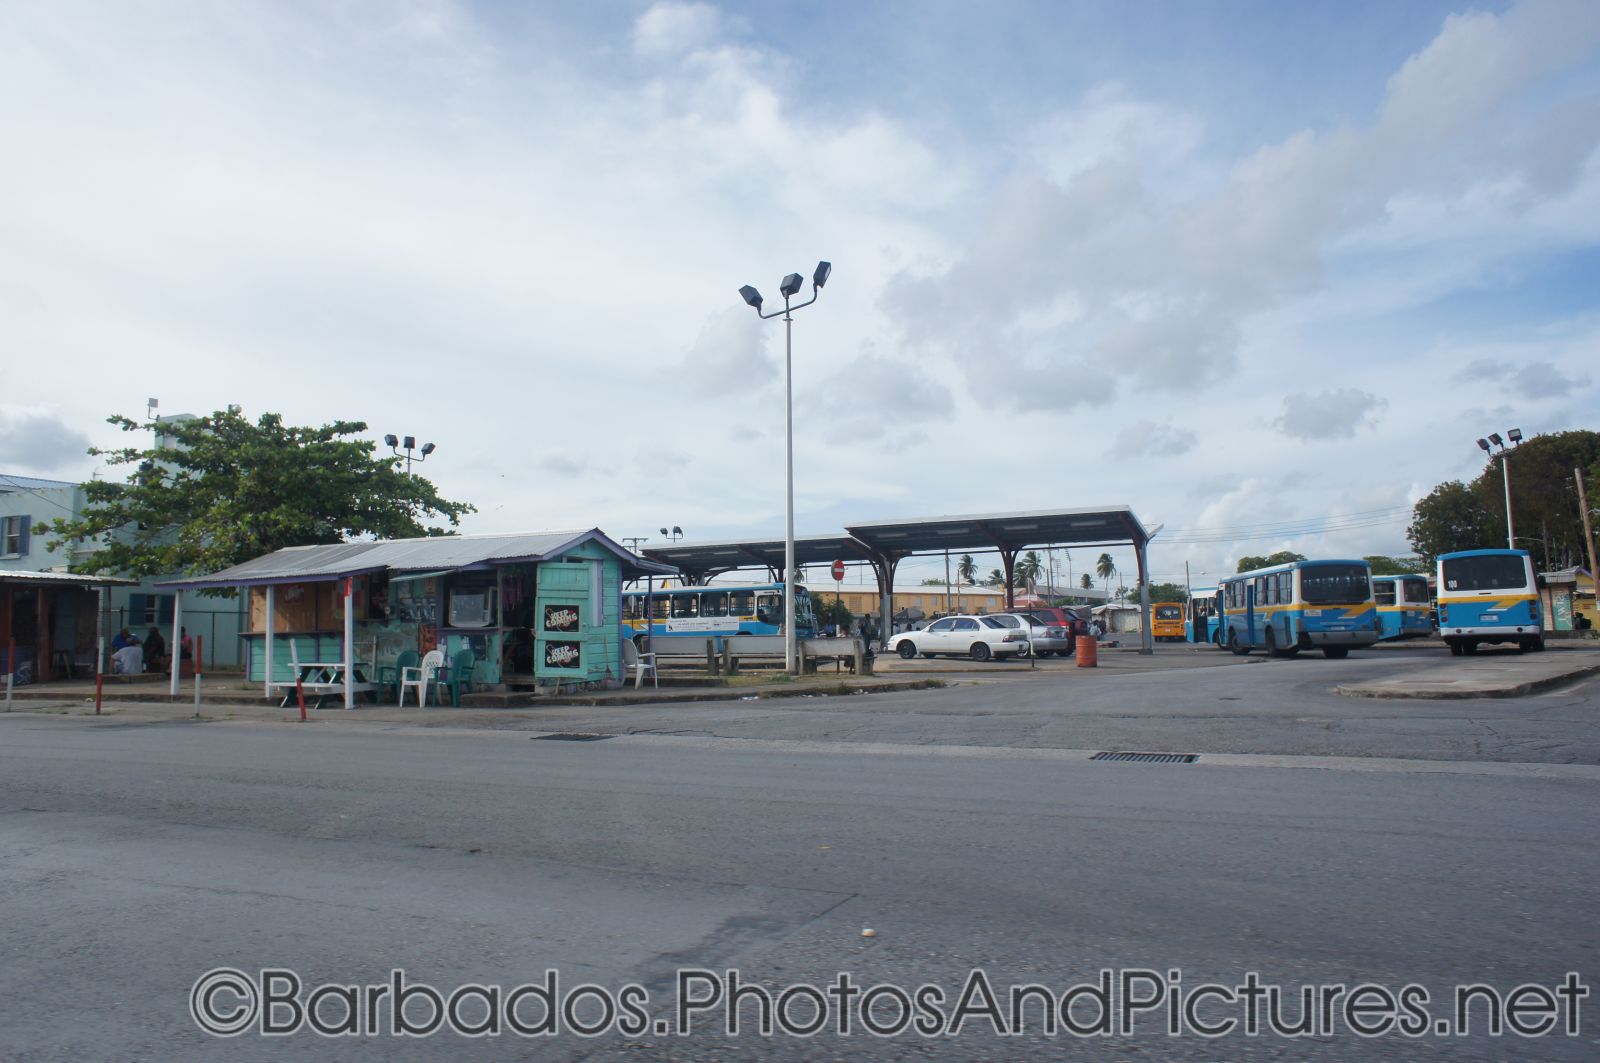 Bus depot in Bridgetown Barbados.jpg
